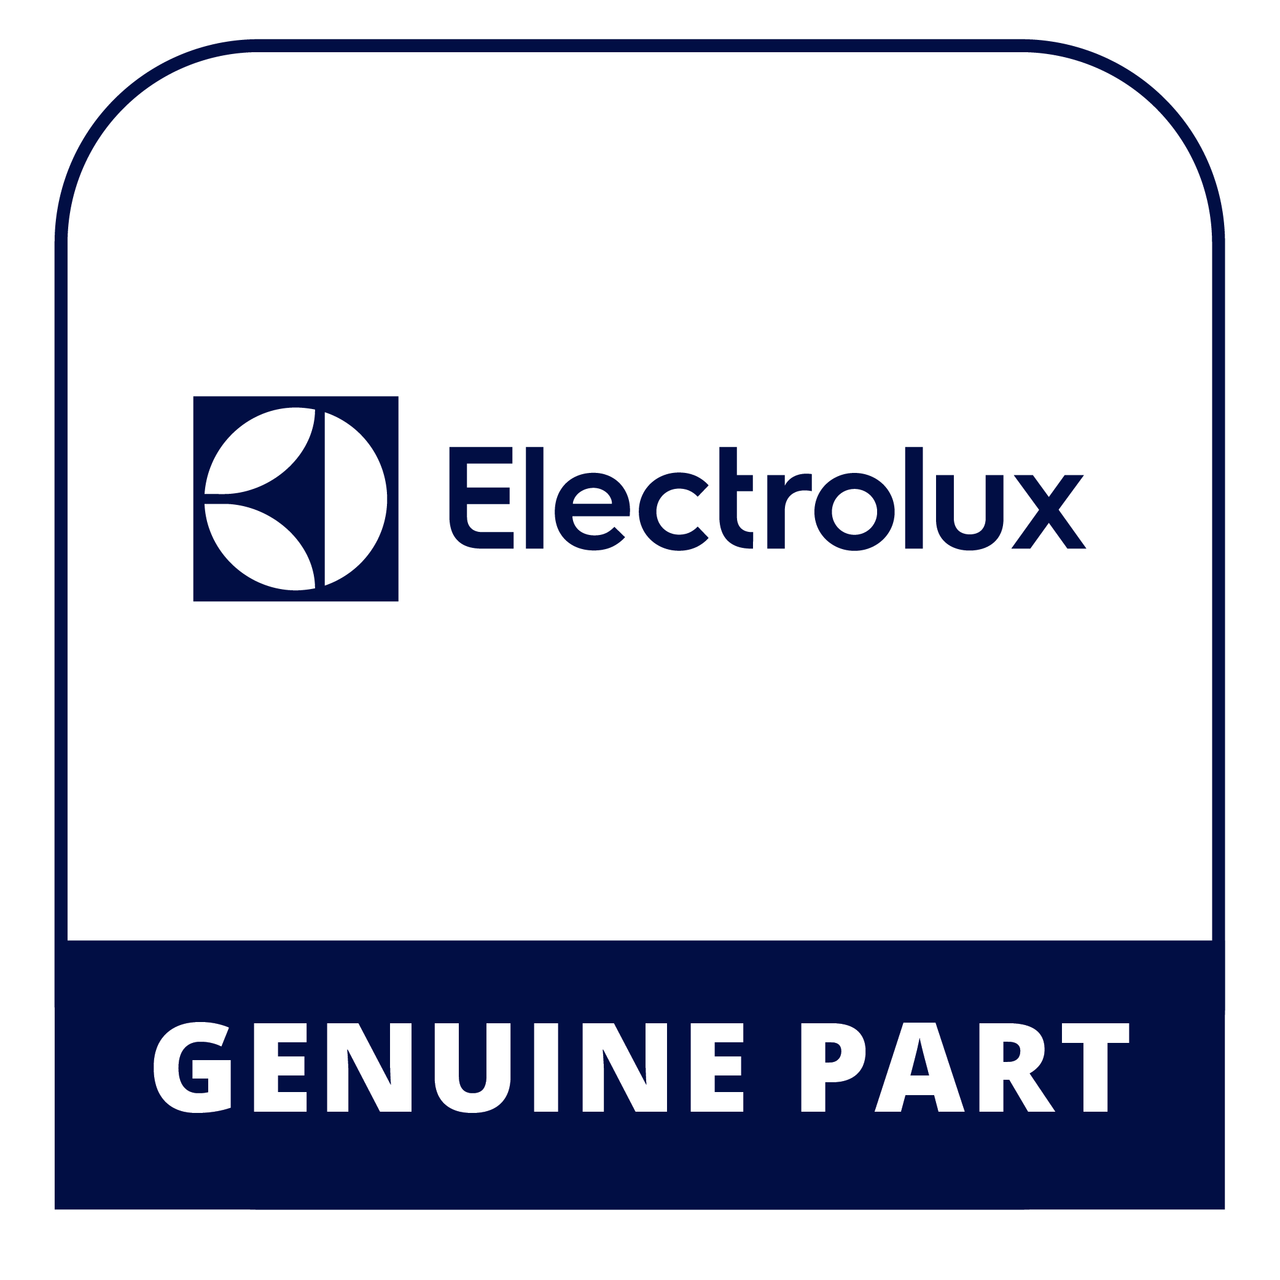 Frigidaire - Electrolux 5304526251 Light - Genuine Electrolux Part